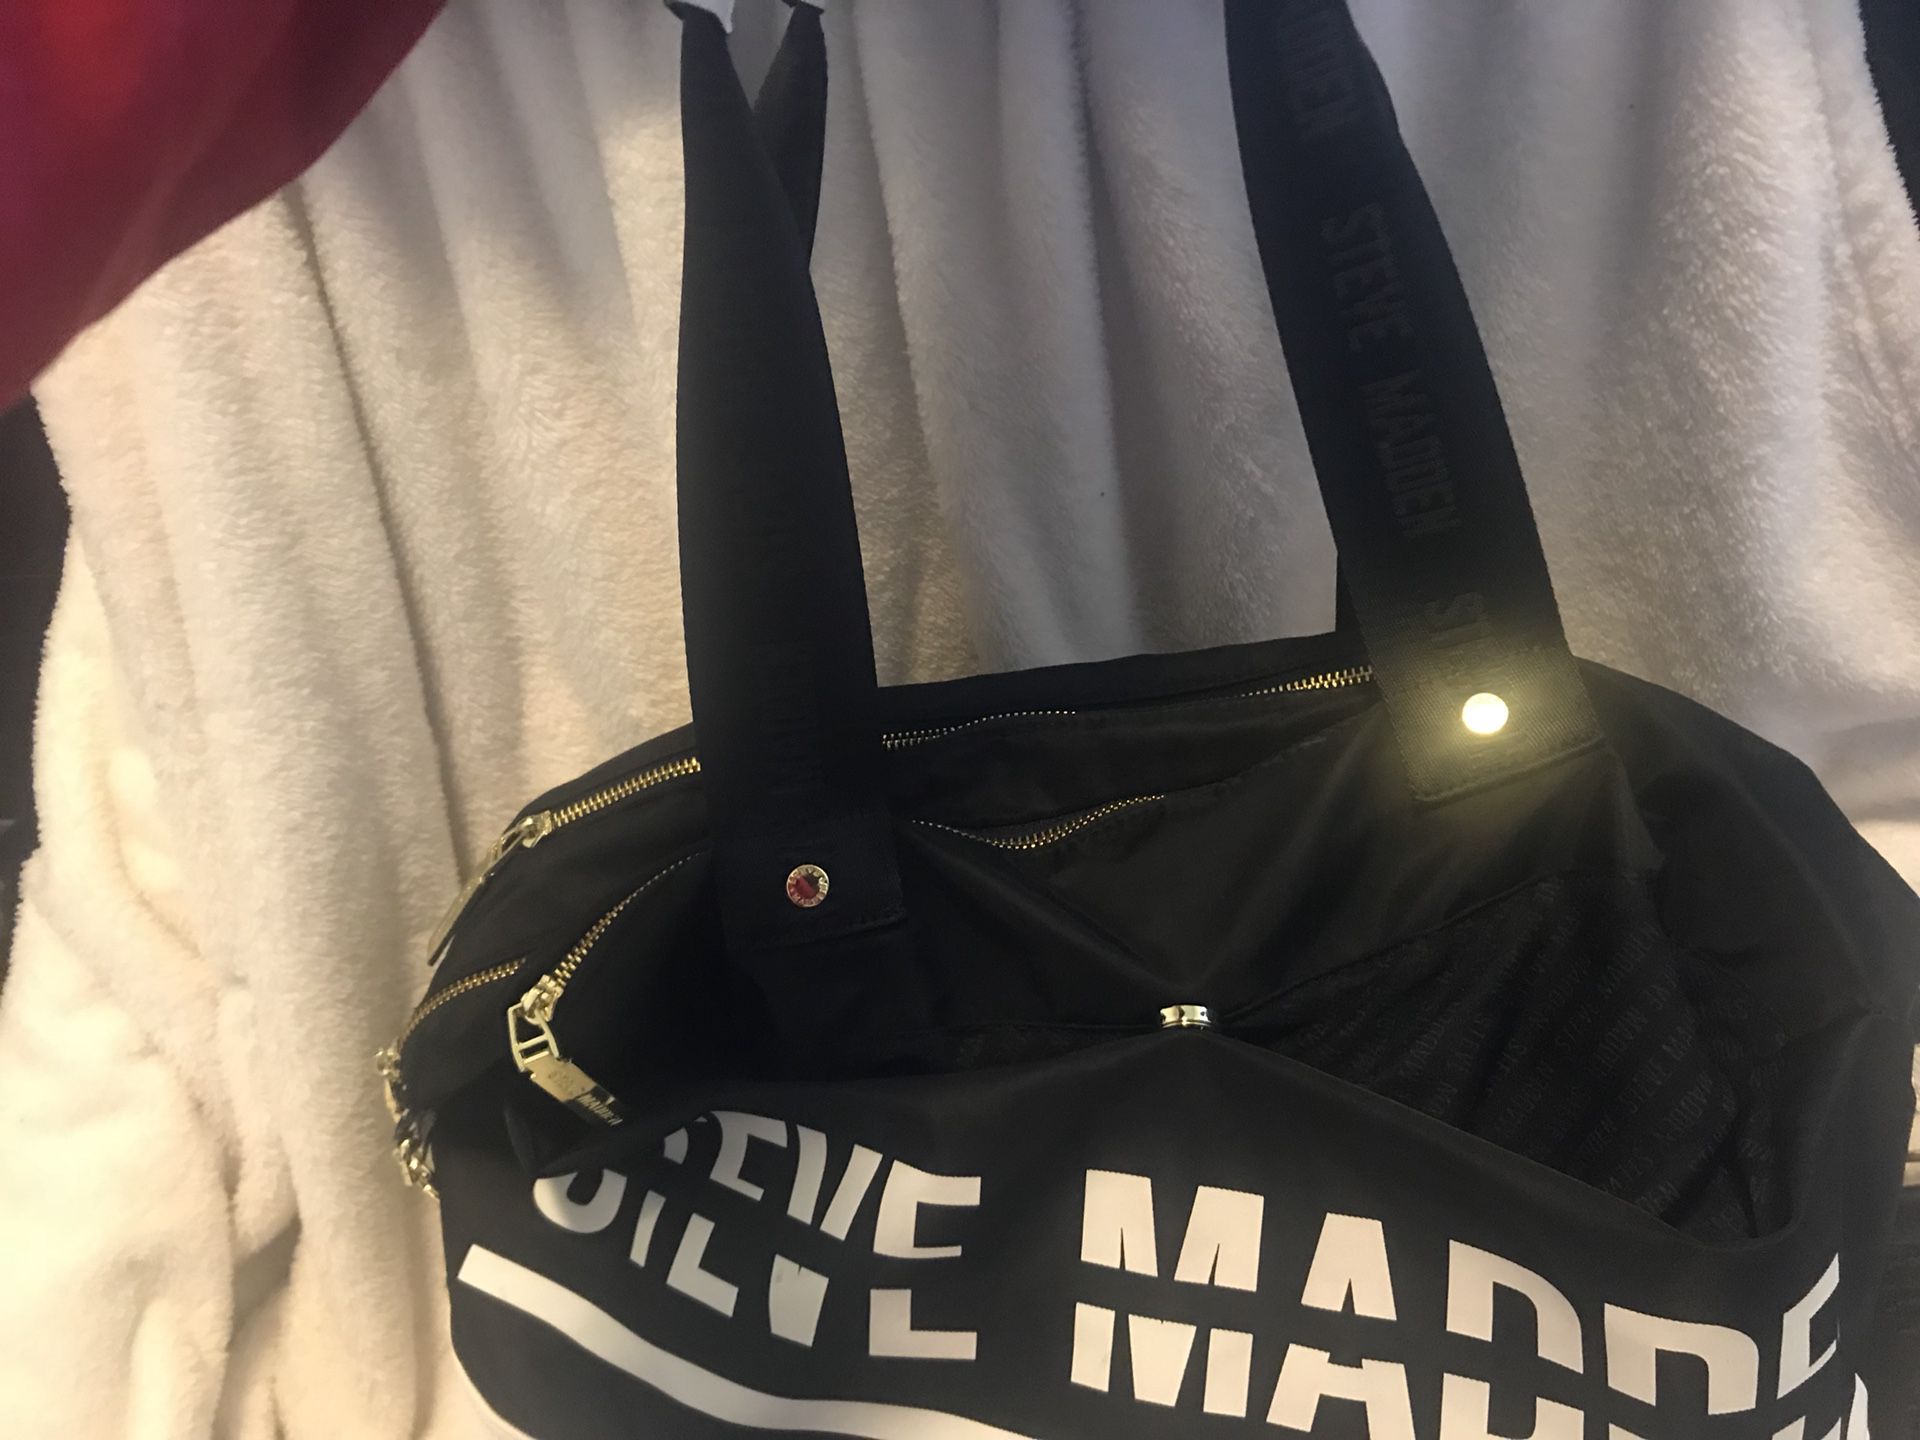 Steve Madden Weekender Bag for Sale in San Diego, CA - OfferUp